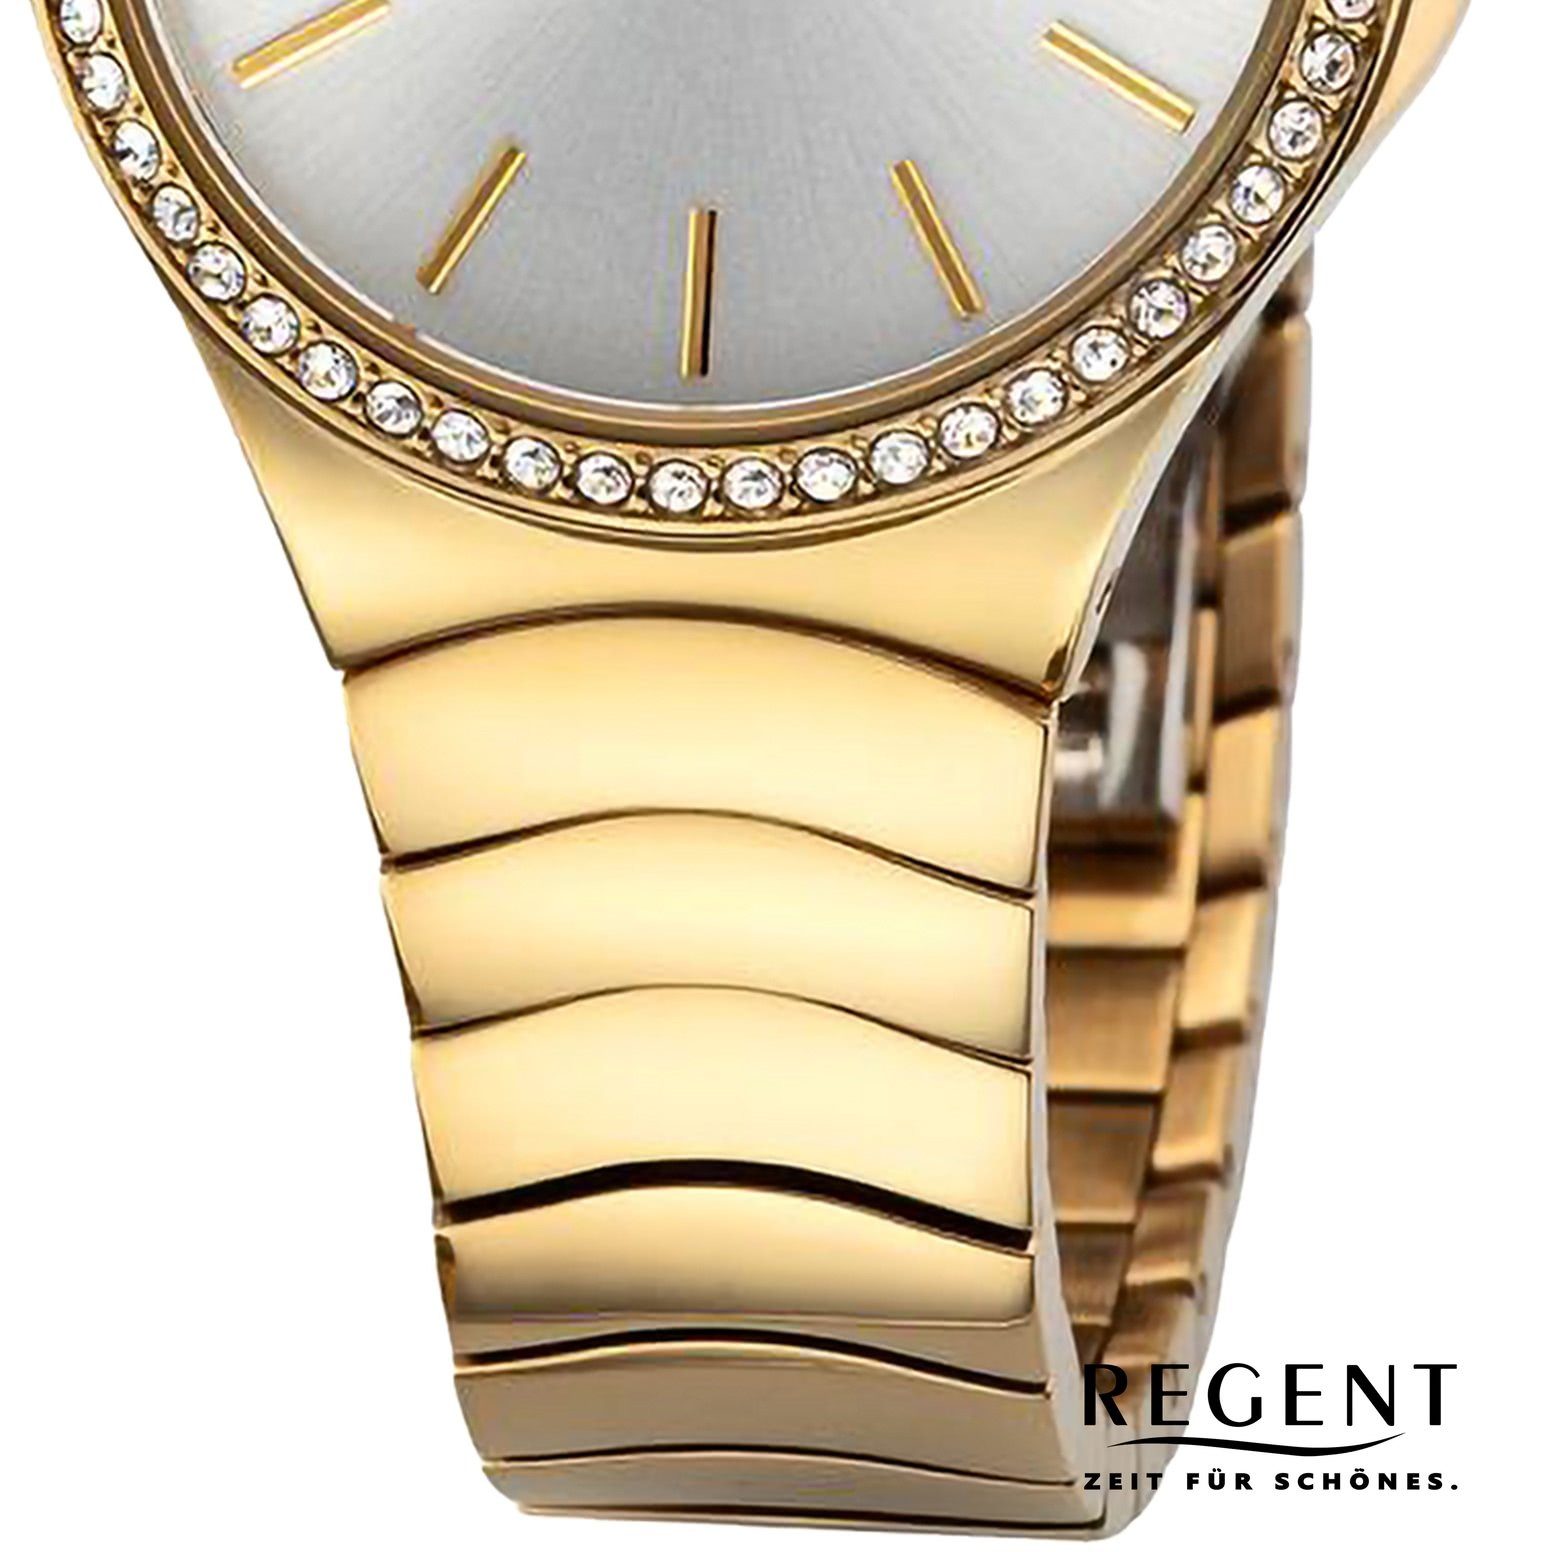 extra rund, Analog, 33mm), Damen (ca. Regent Regent Quarzuhr Damen Metallarmband Armbanduhr Armbanduhr groß